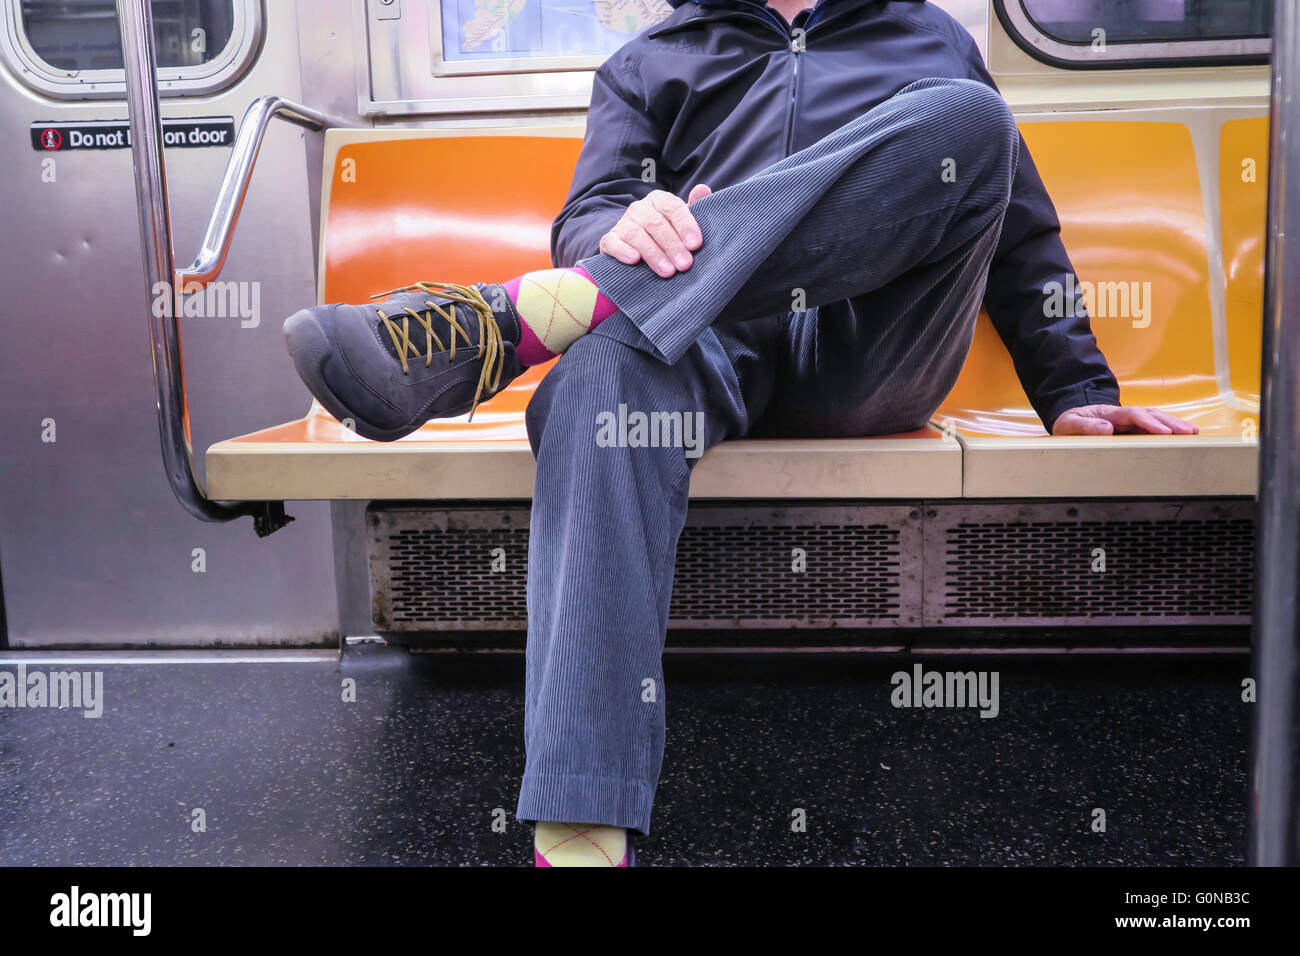 Man Hogging More than One Seat (man spreading) on New York City Subway (tube), NYC, USA Stock Photo